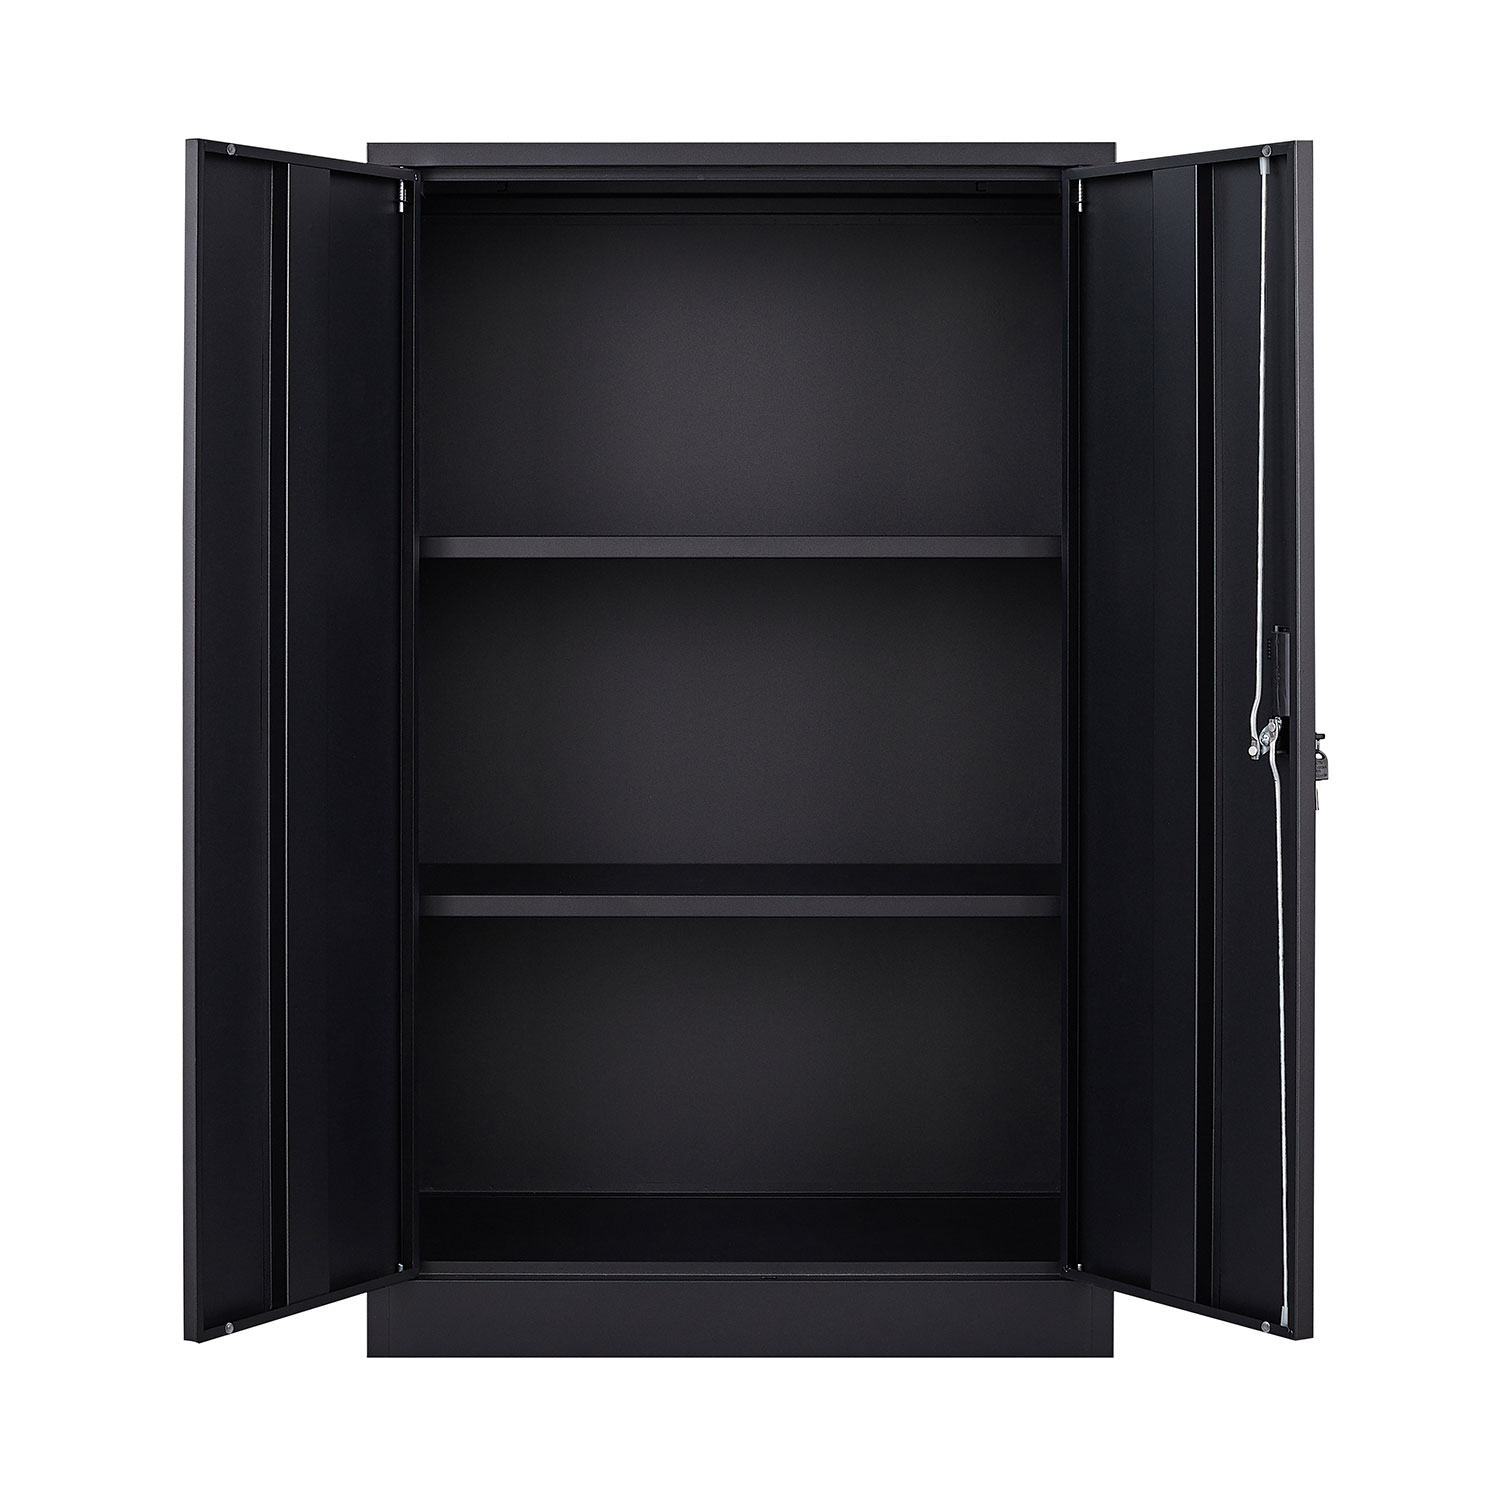 Metal Storage Cabinet with Locking Doors and Adjustable Shelf,Folding Filing Storage Cabinet,Rolling Storage Locker Cabinet for Home Office,School,Black - image 5 of 5